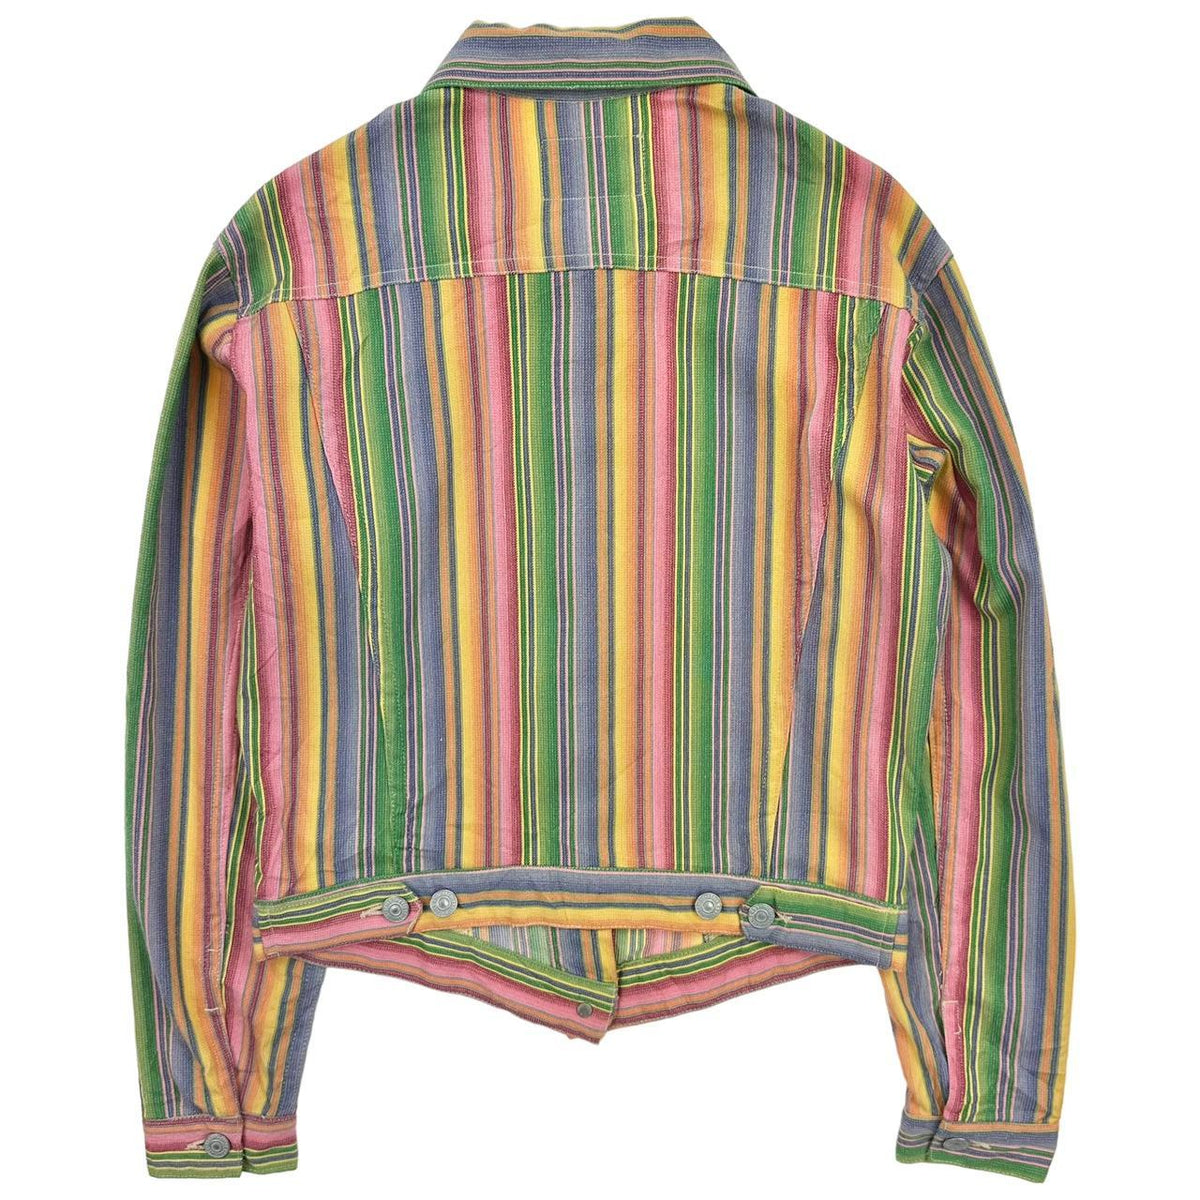 Vintage Evisu striped jacket woman’s size S